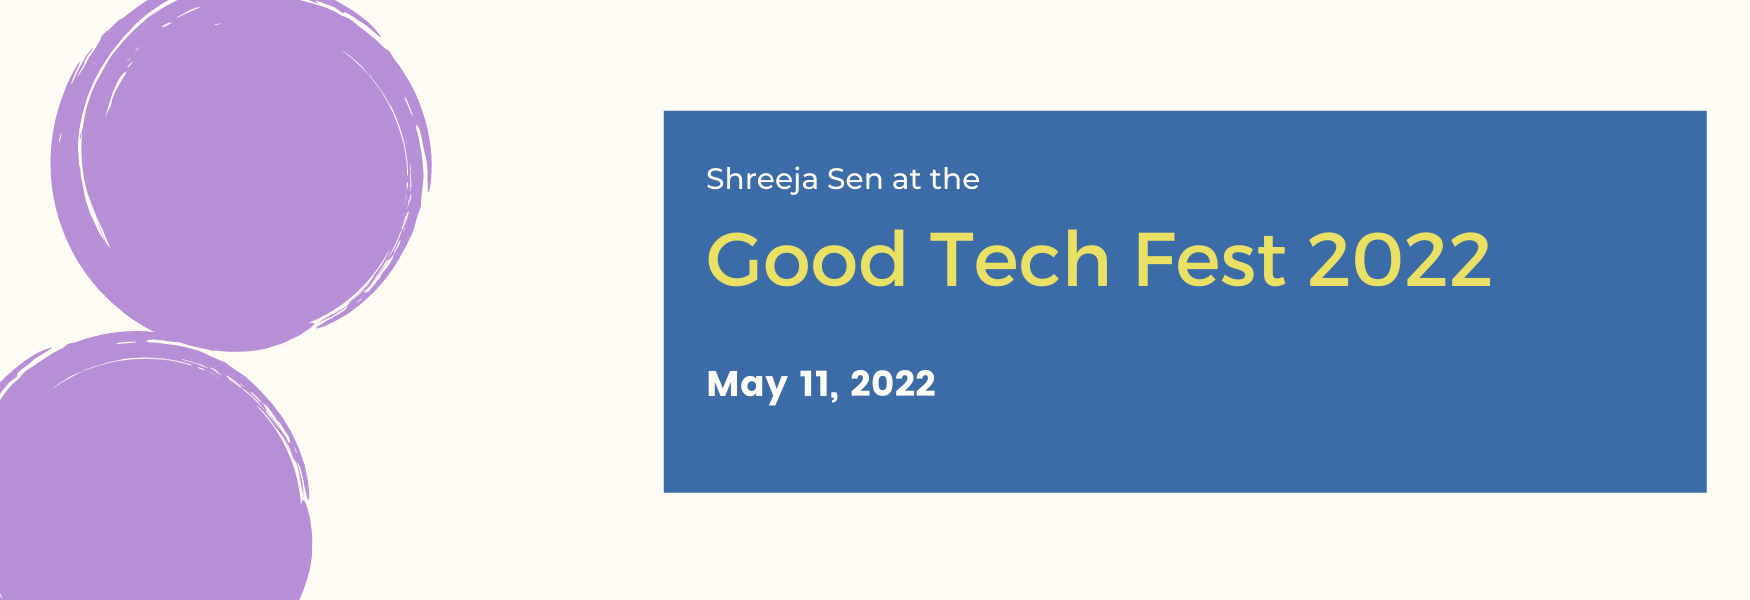 The Good Tech Fest 2022